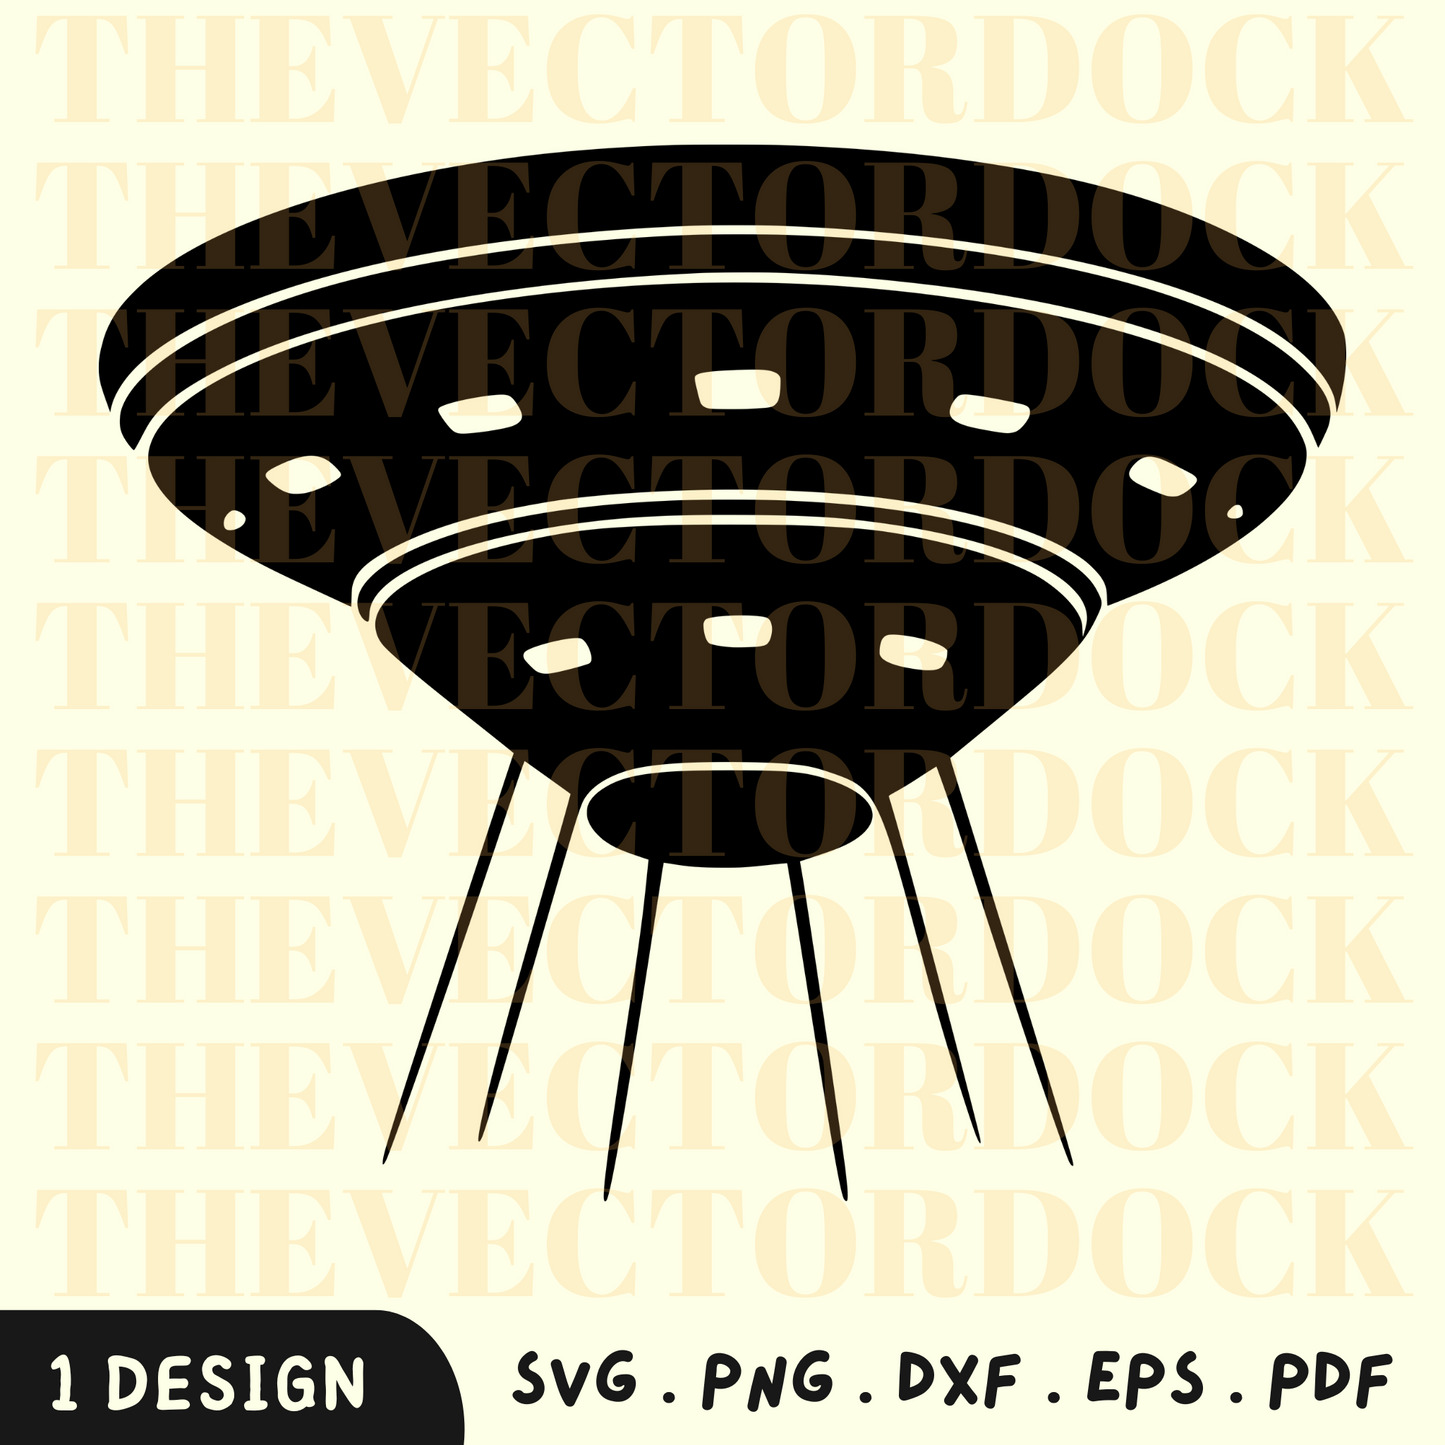 UFO SVG Design, UFO SVG, UFO Silhouette, UFO, Space Art, UFO Vector